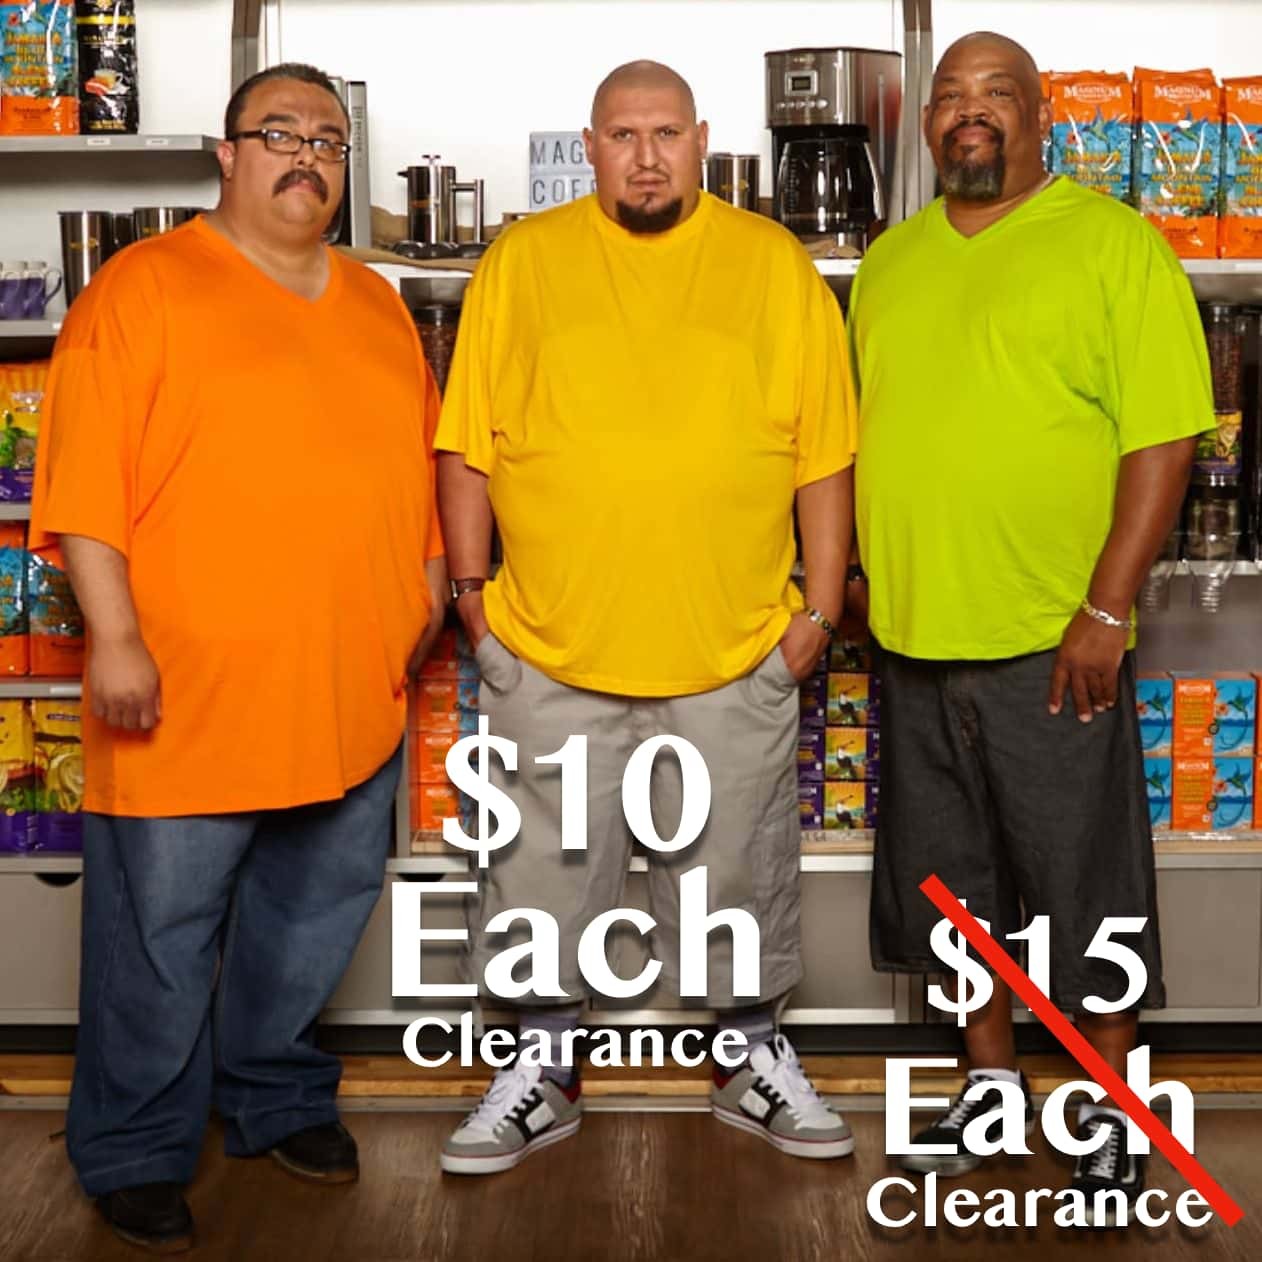 All Lemon, Lime, and Orange T-Shirts $15 Clearance